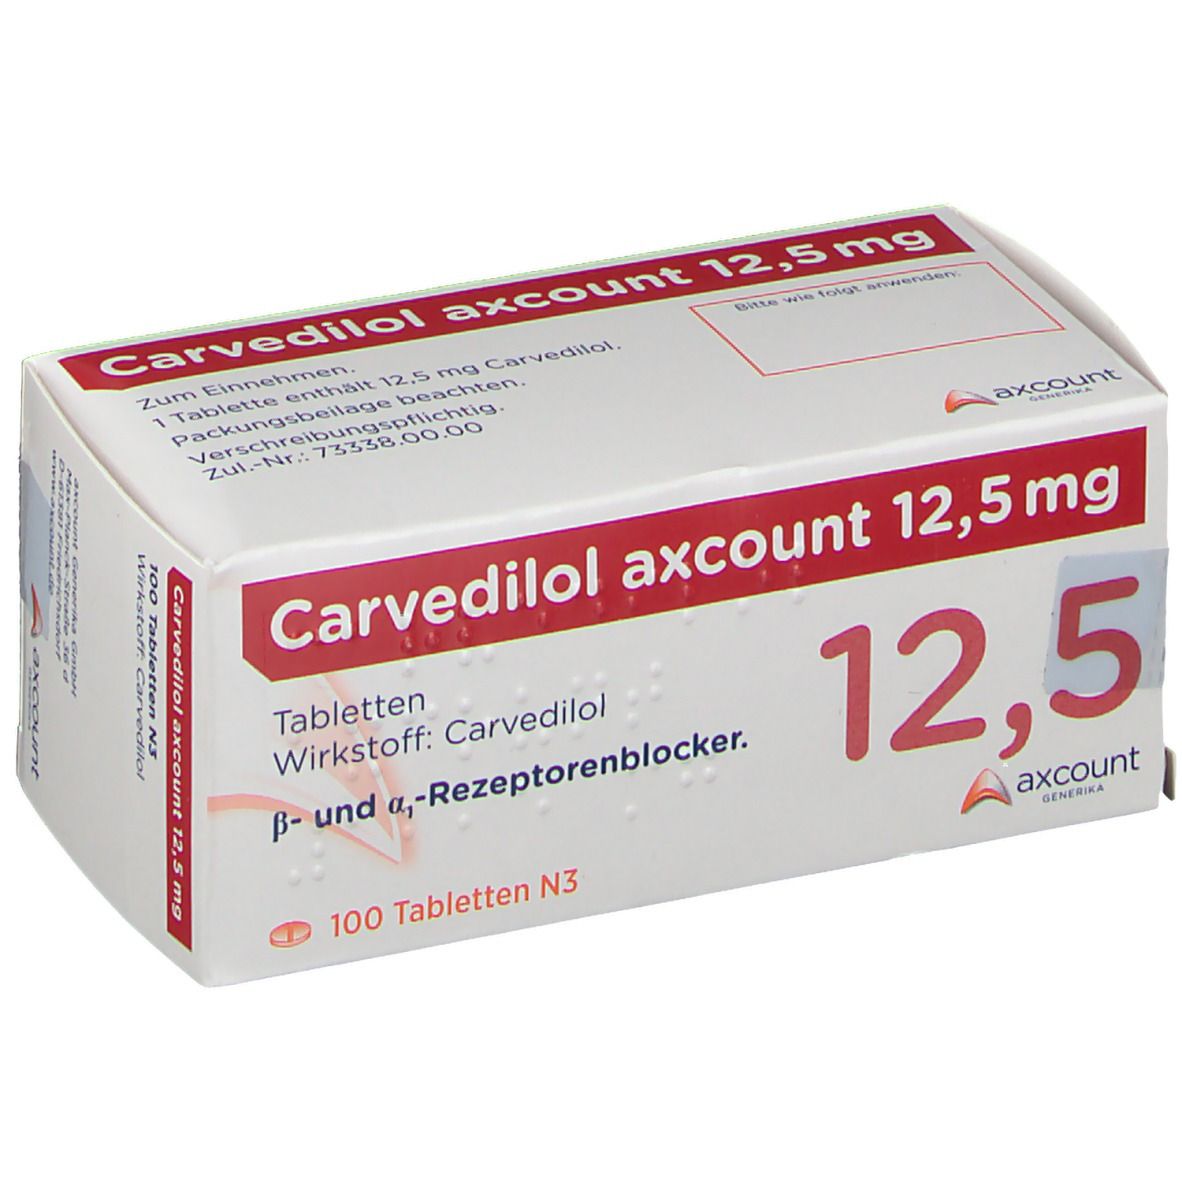 Carvedilol axcount 12,5 mg